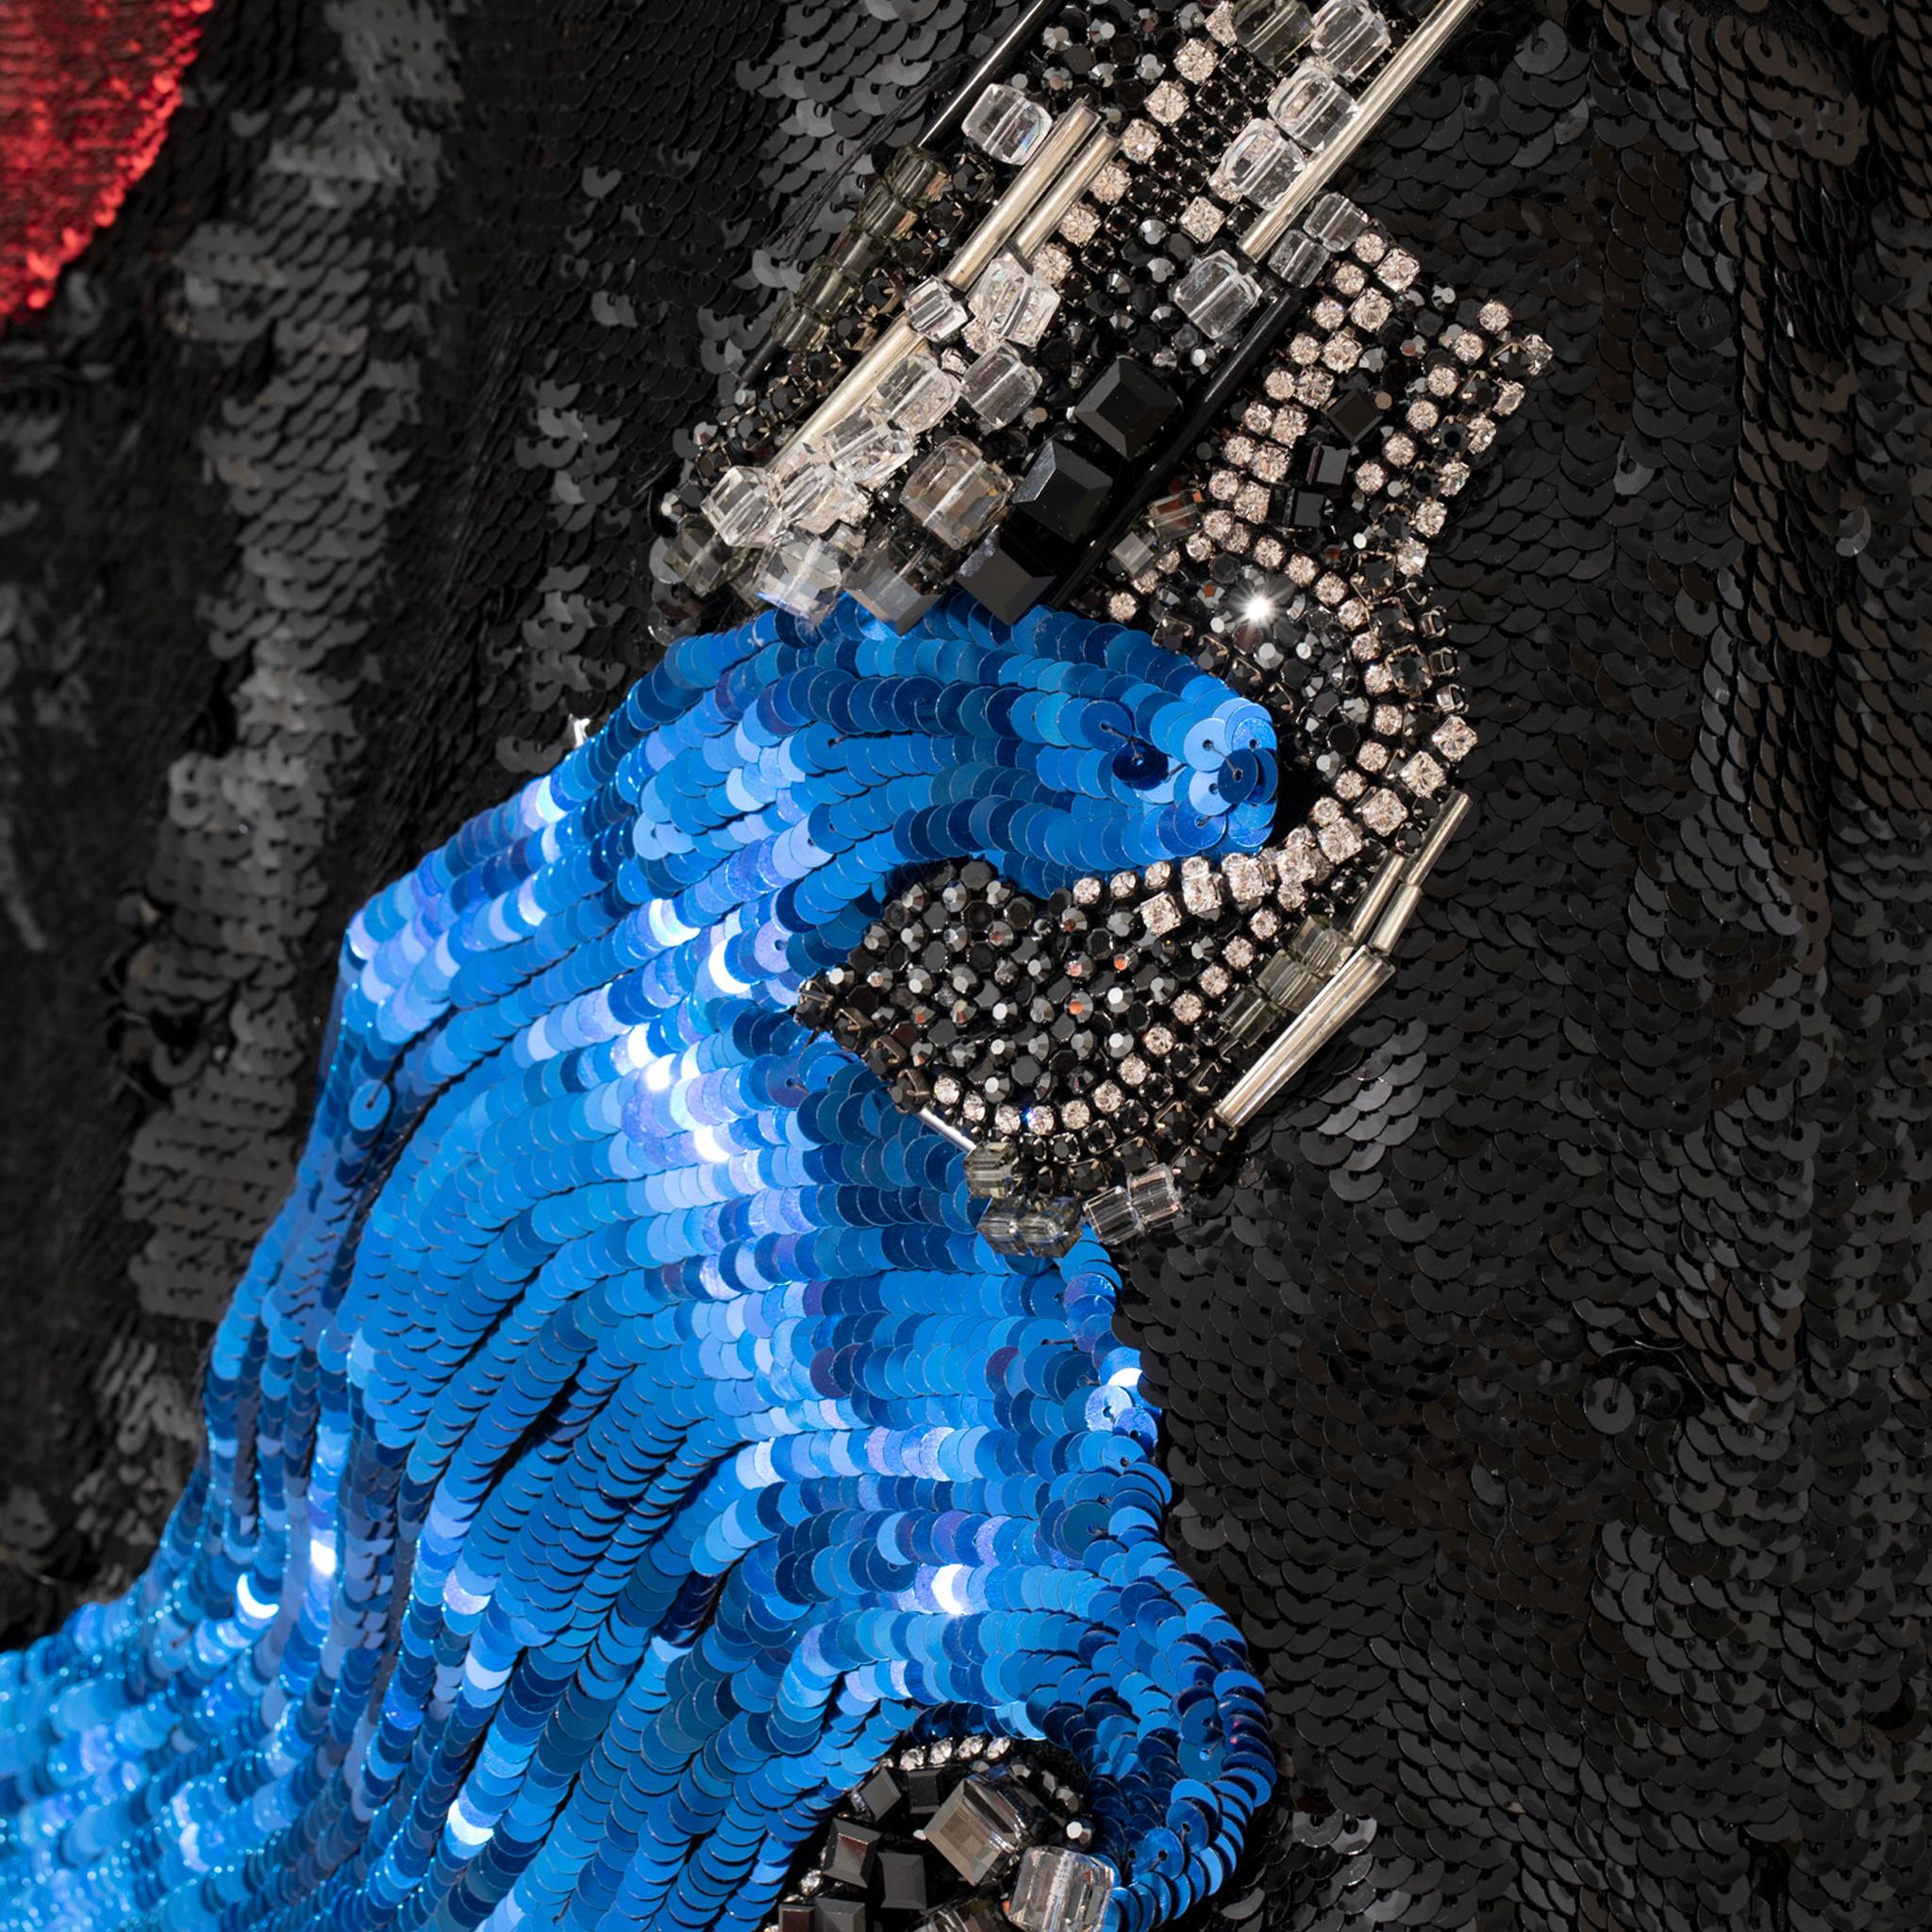 Saint Laurent X John Baldessari by Hedi Slimane Sequin Mini Dress Look #13 For Sale 6